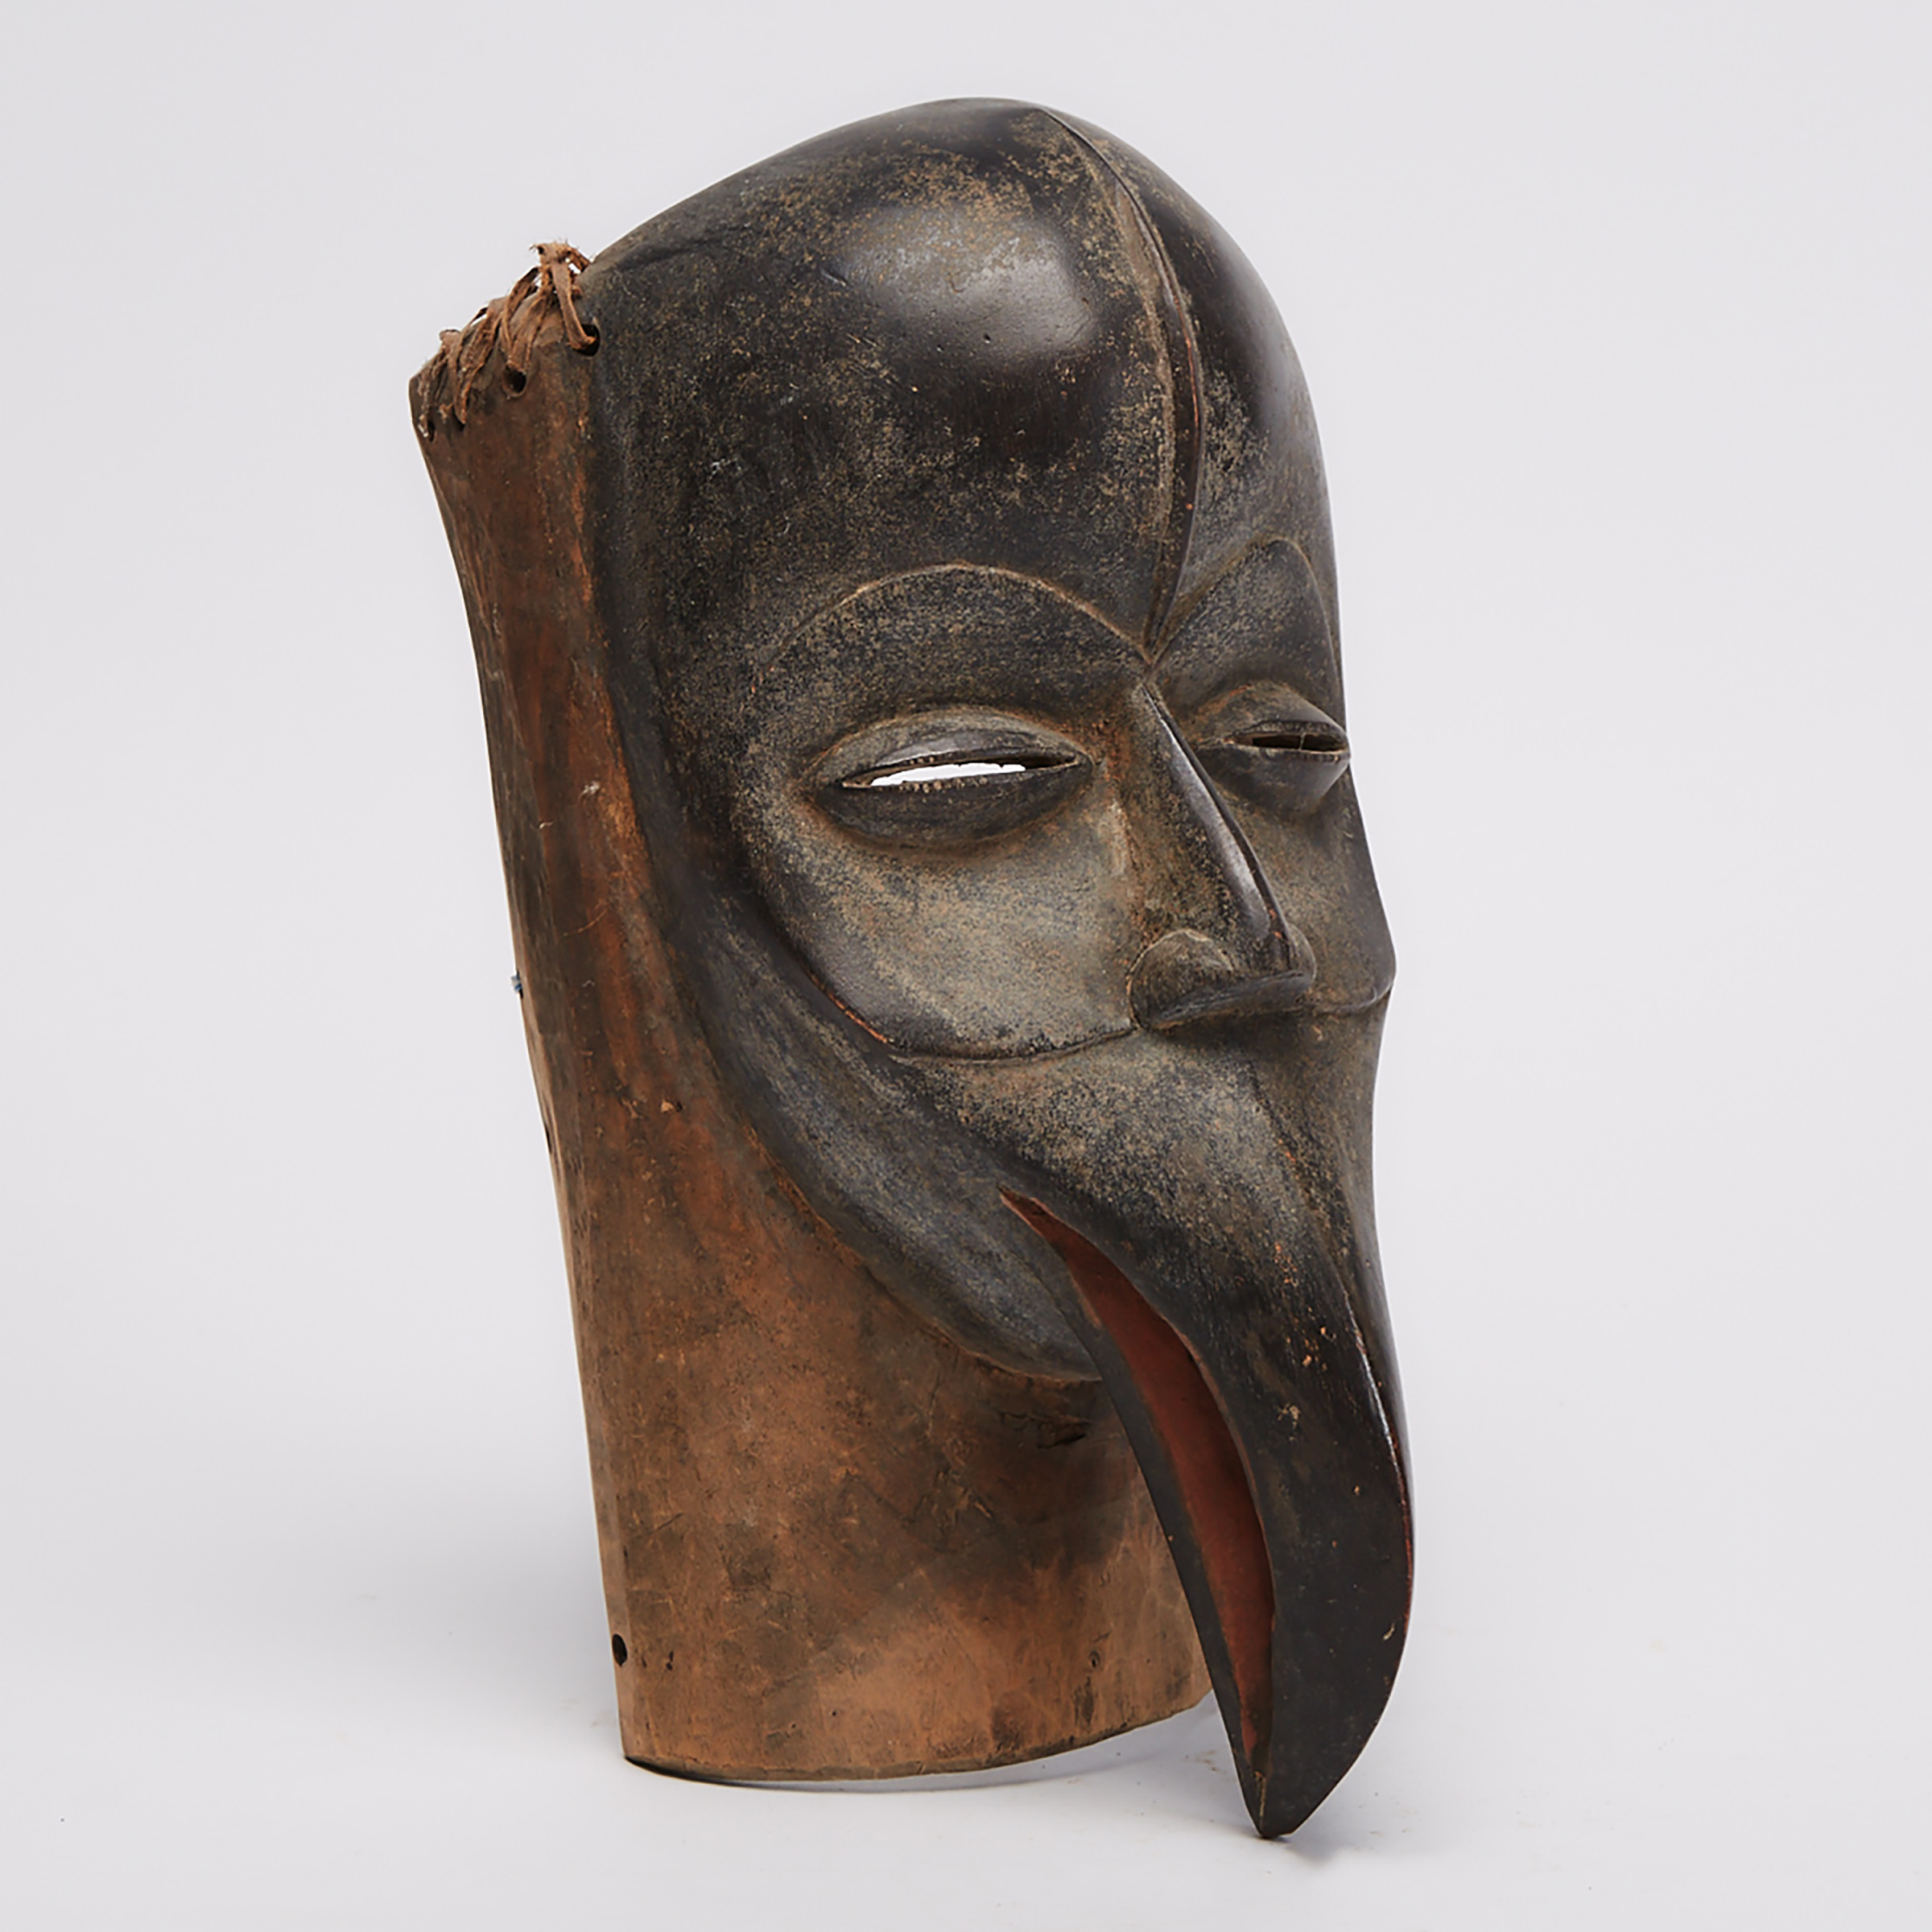 Dan Bird Mask, Ivory Coast/ Liberia, West Africa